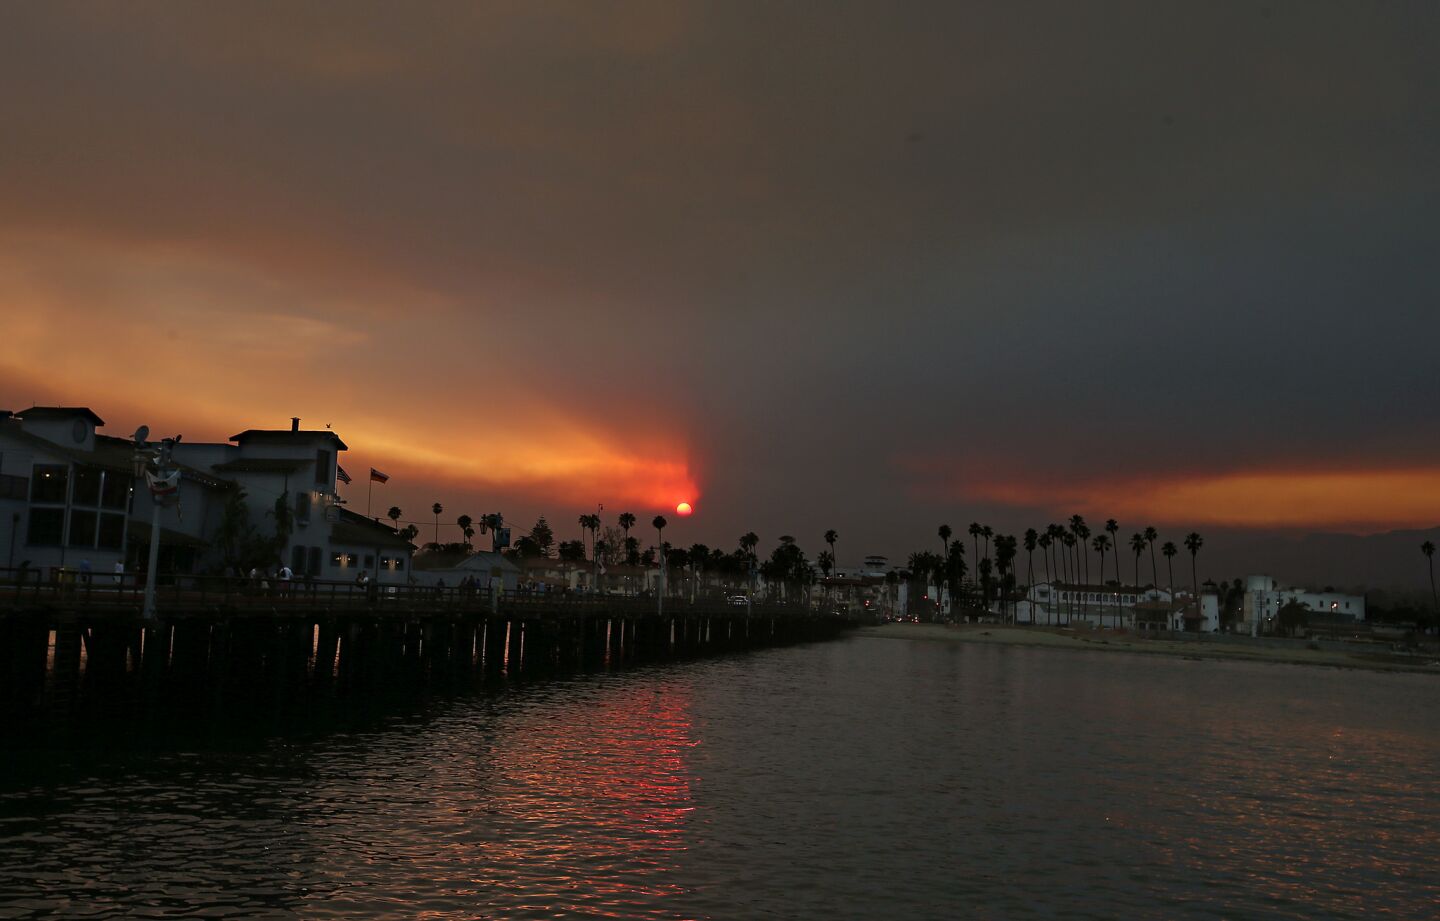 A smokey pall hangs over Santa Barbara from a new wildfire near Lake Cachuma.